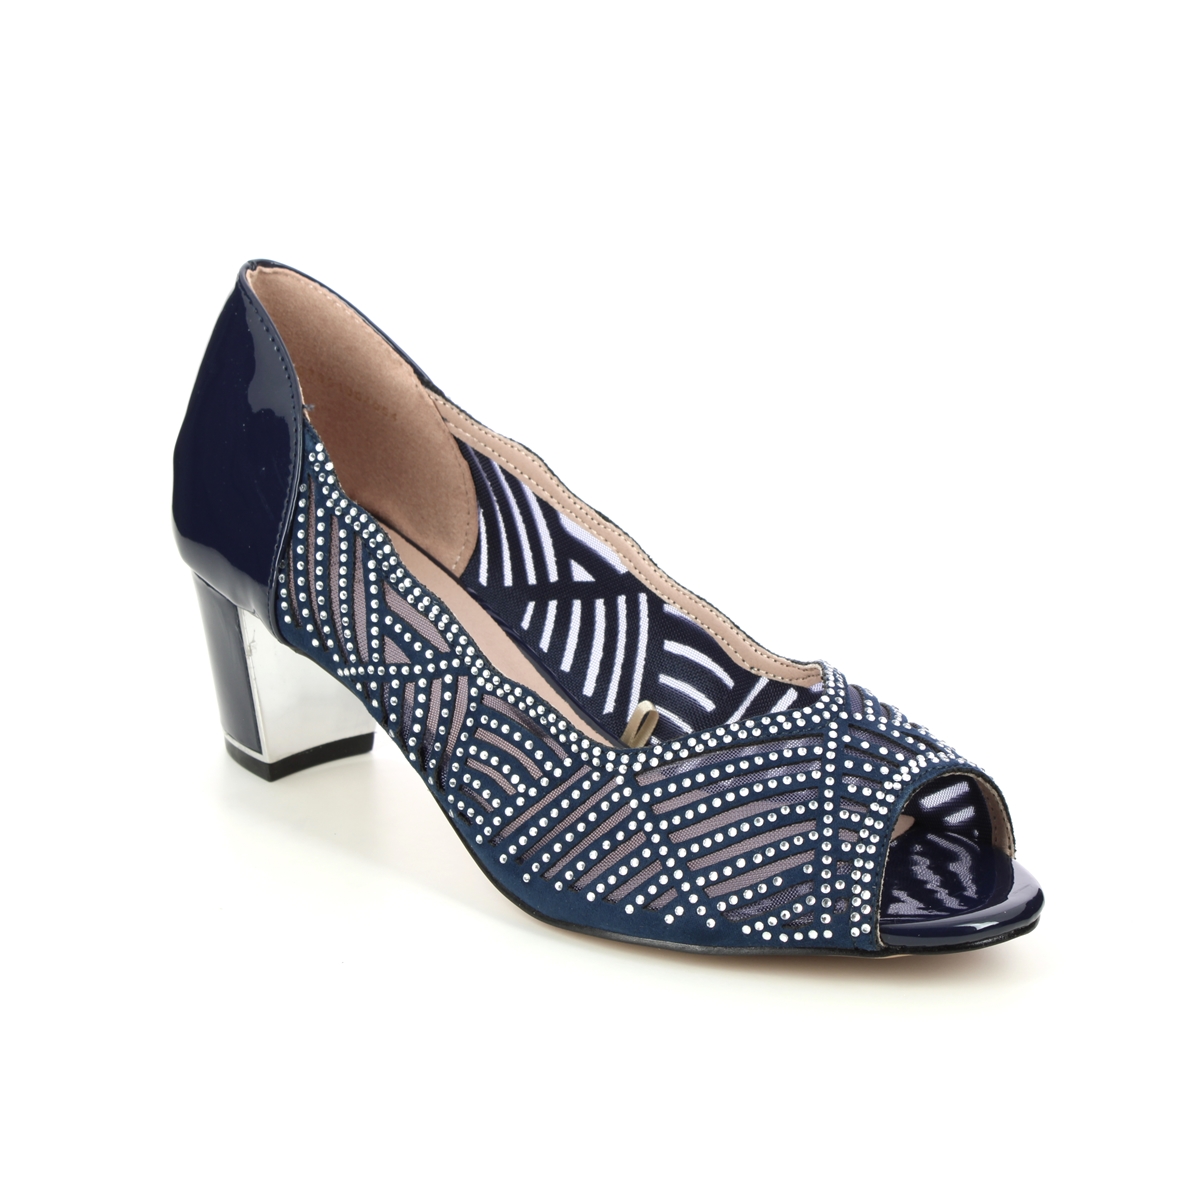 Buy the silver Lotus ladies' Panache court shoes online